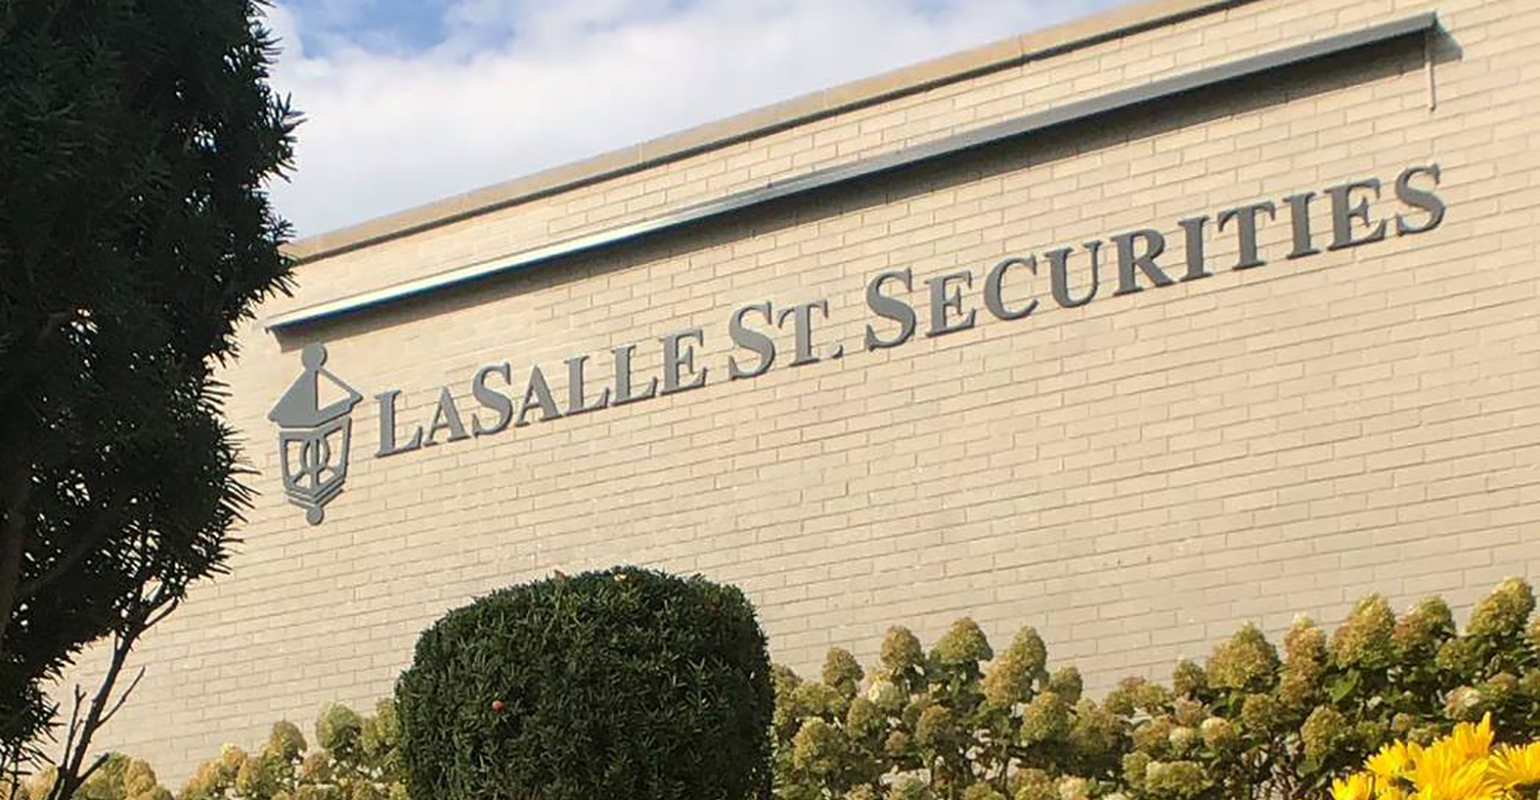 LaSalle Street Securities